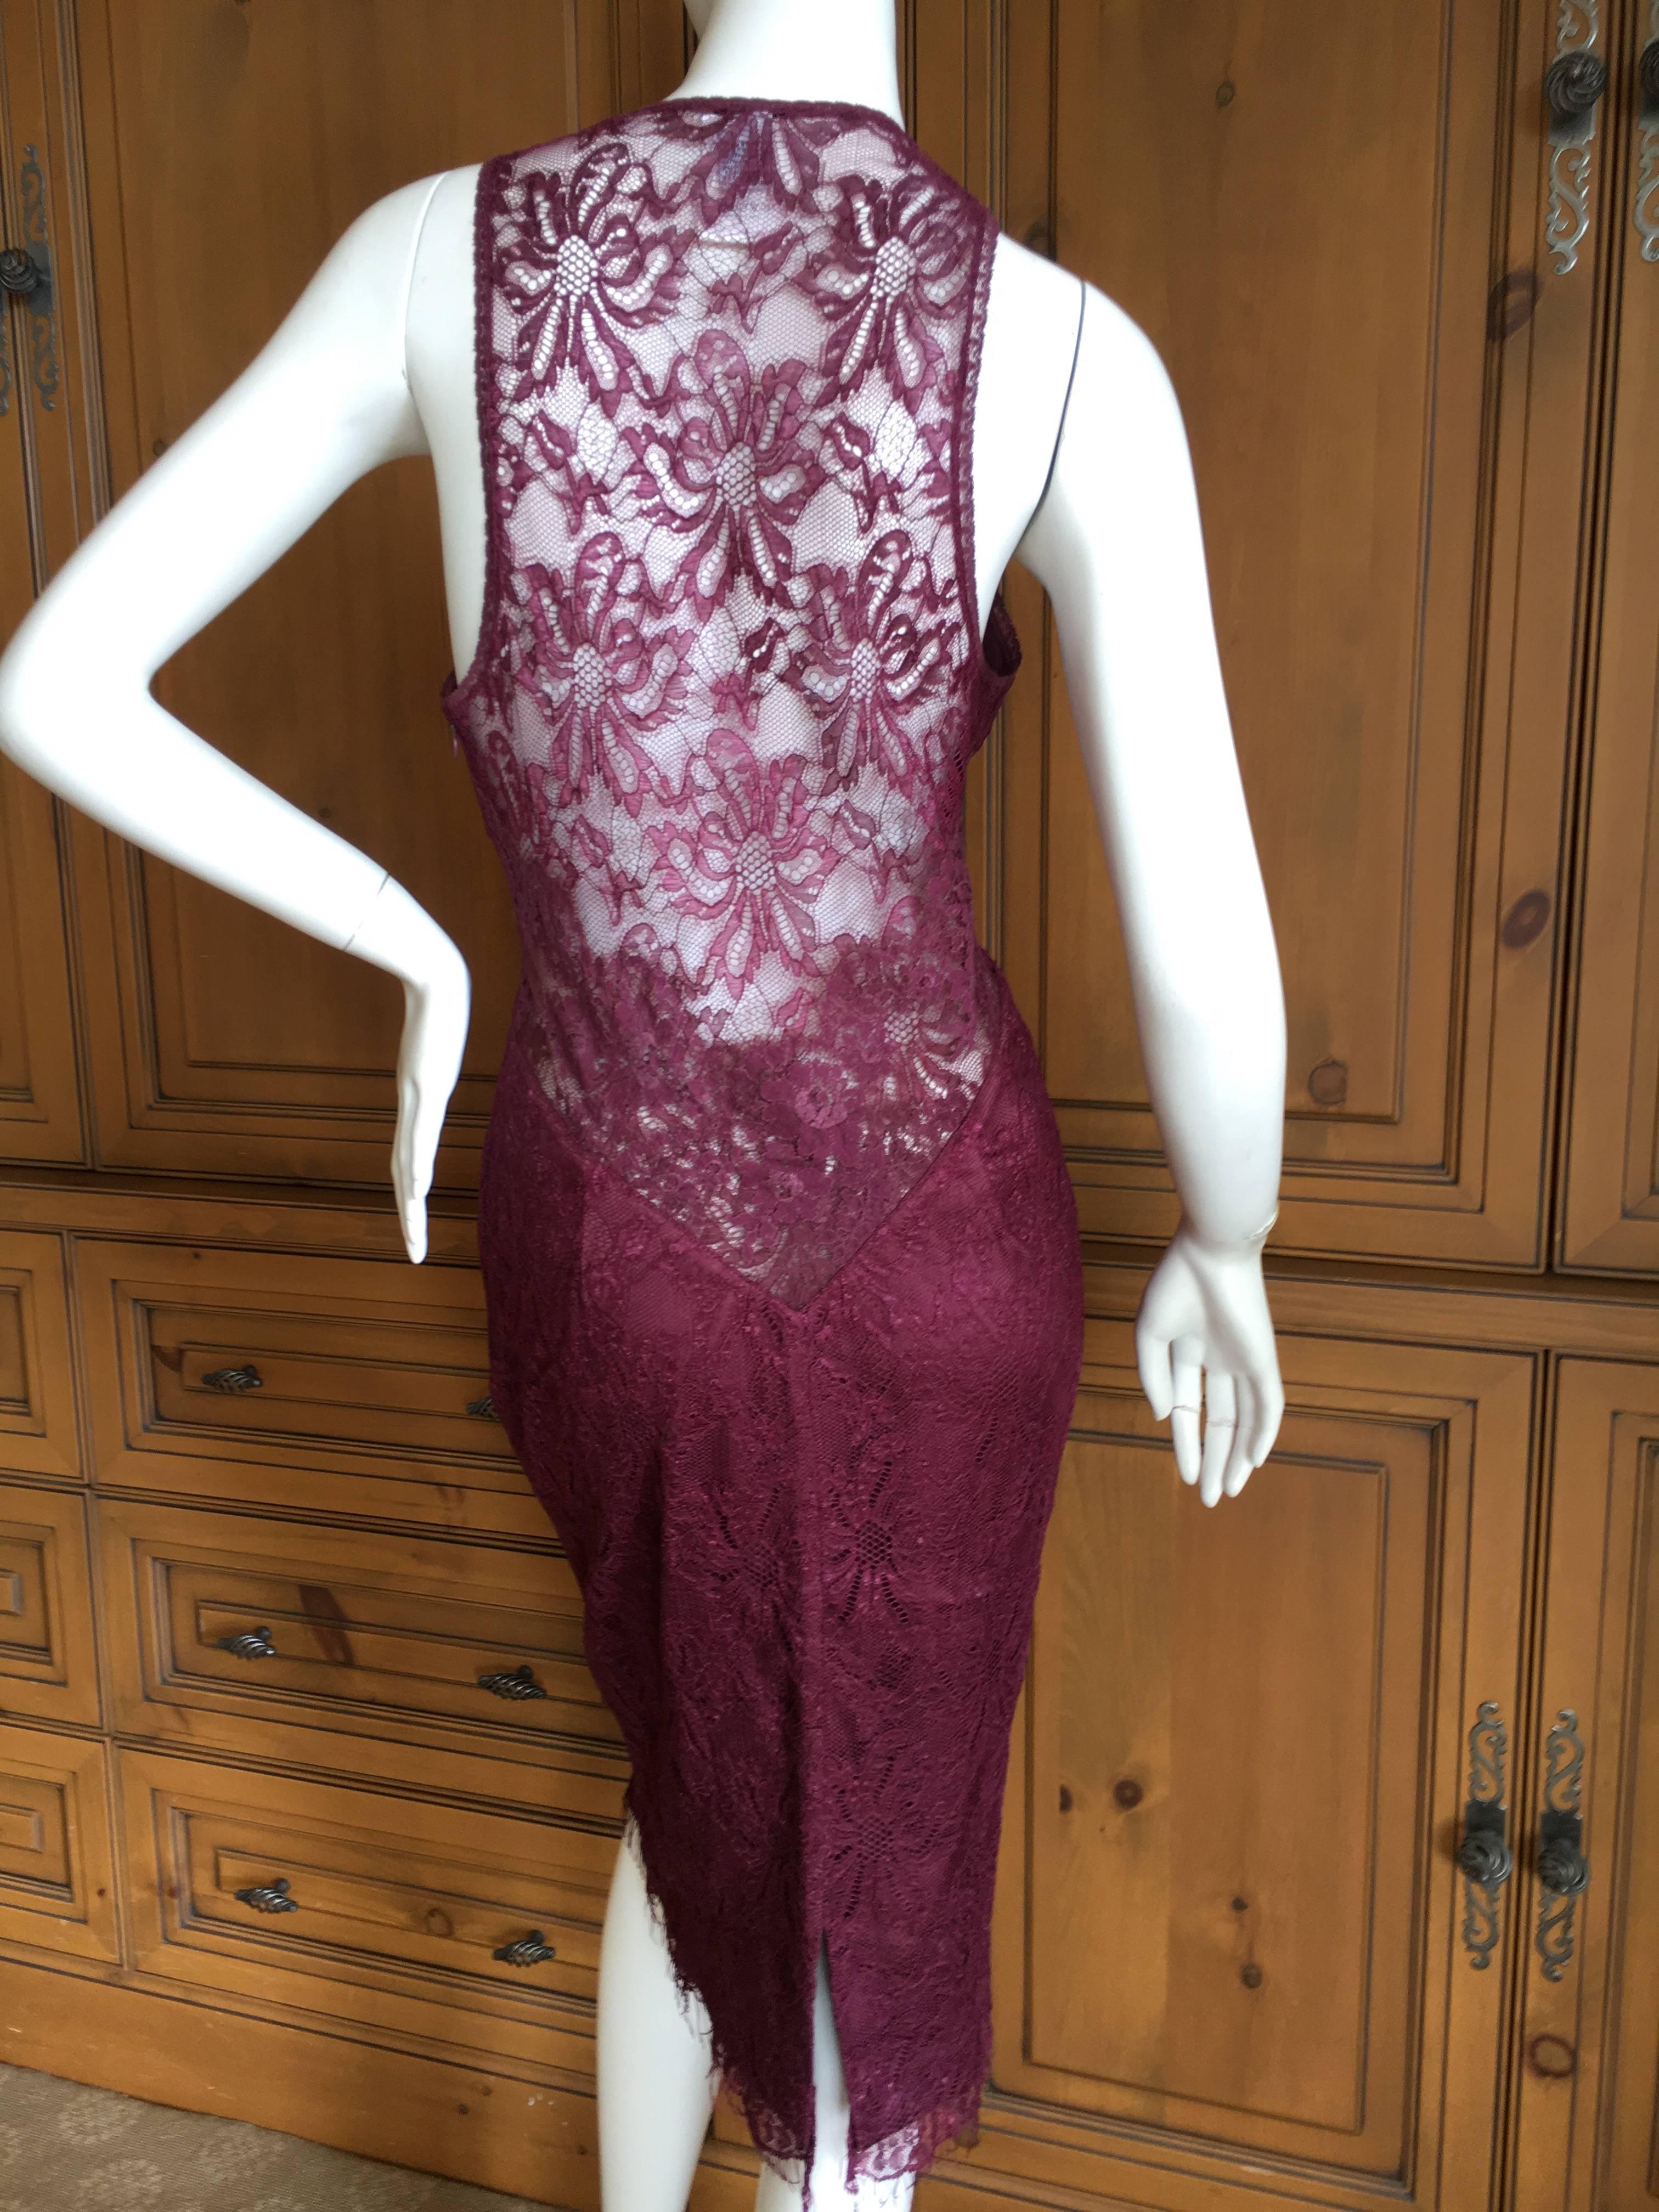  D&G Dolce & Gabbana Vintage Lace Overlay Sheer Cocktail Dress For Sale 3